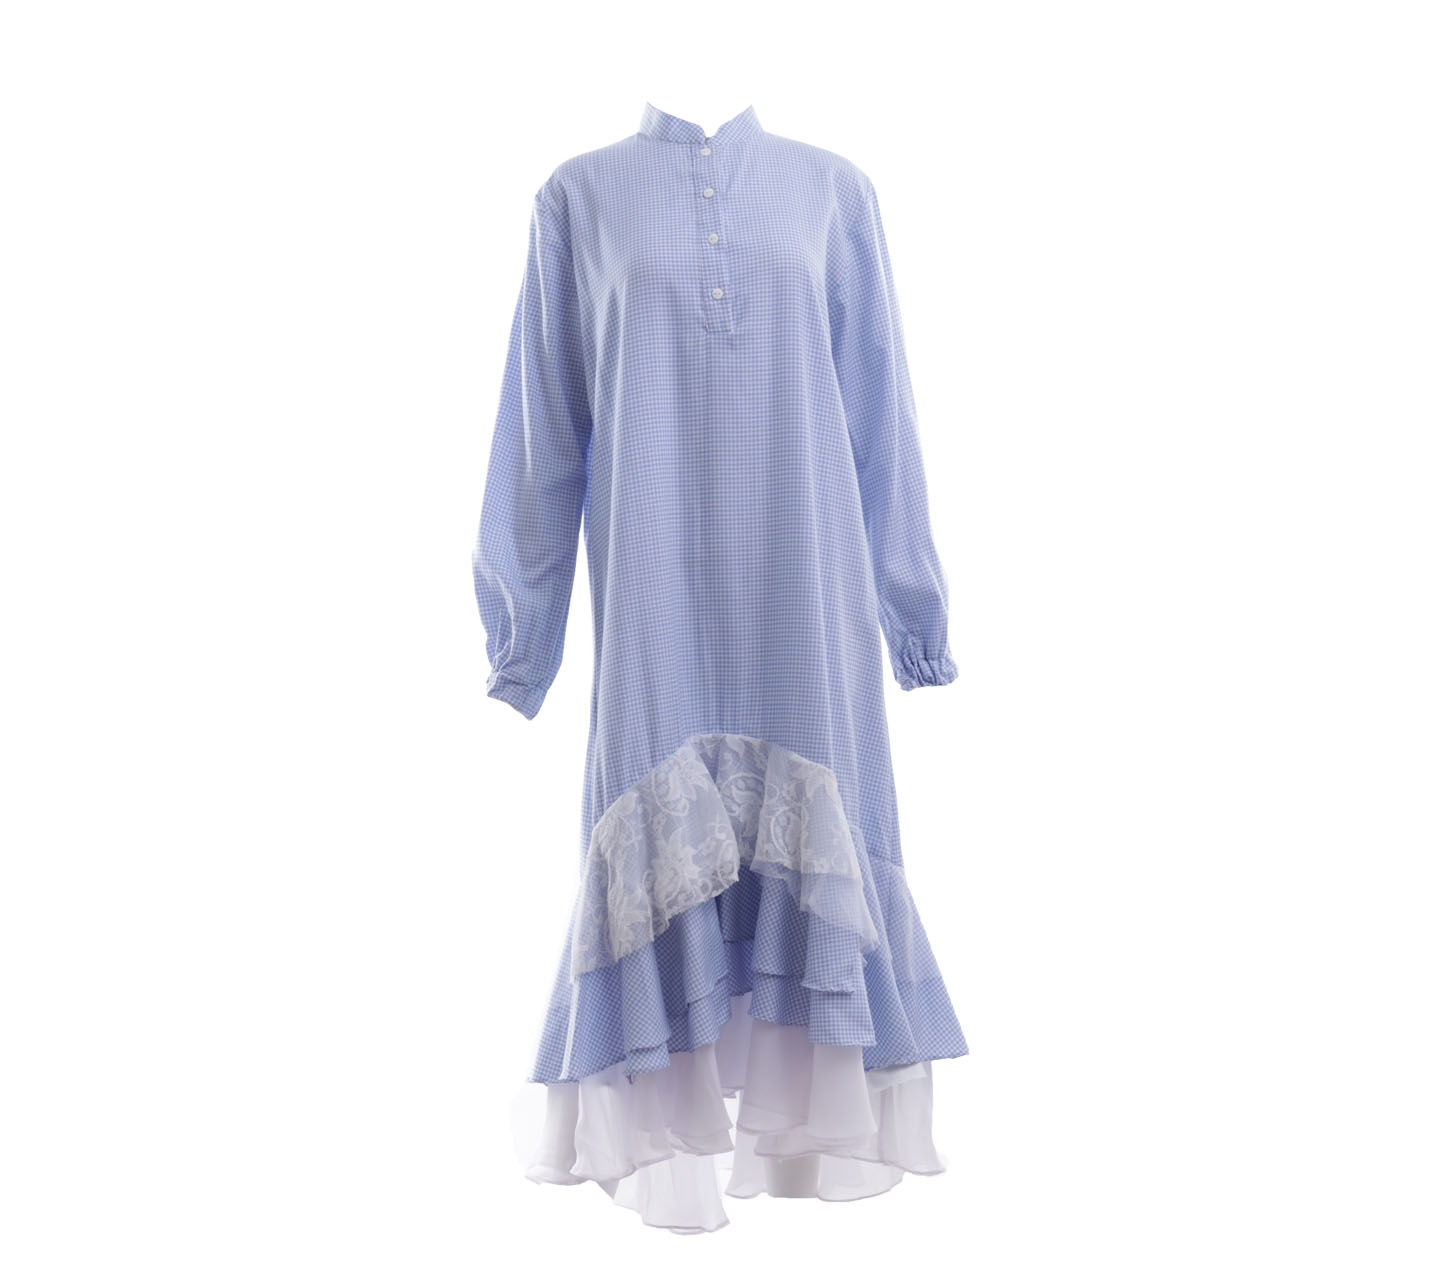 Simplymii Blue & White Plaid Midi Dress